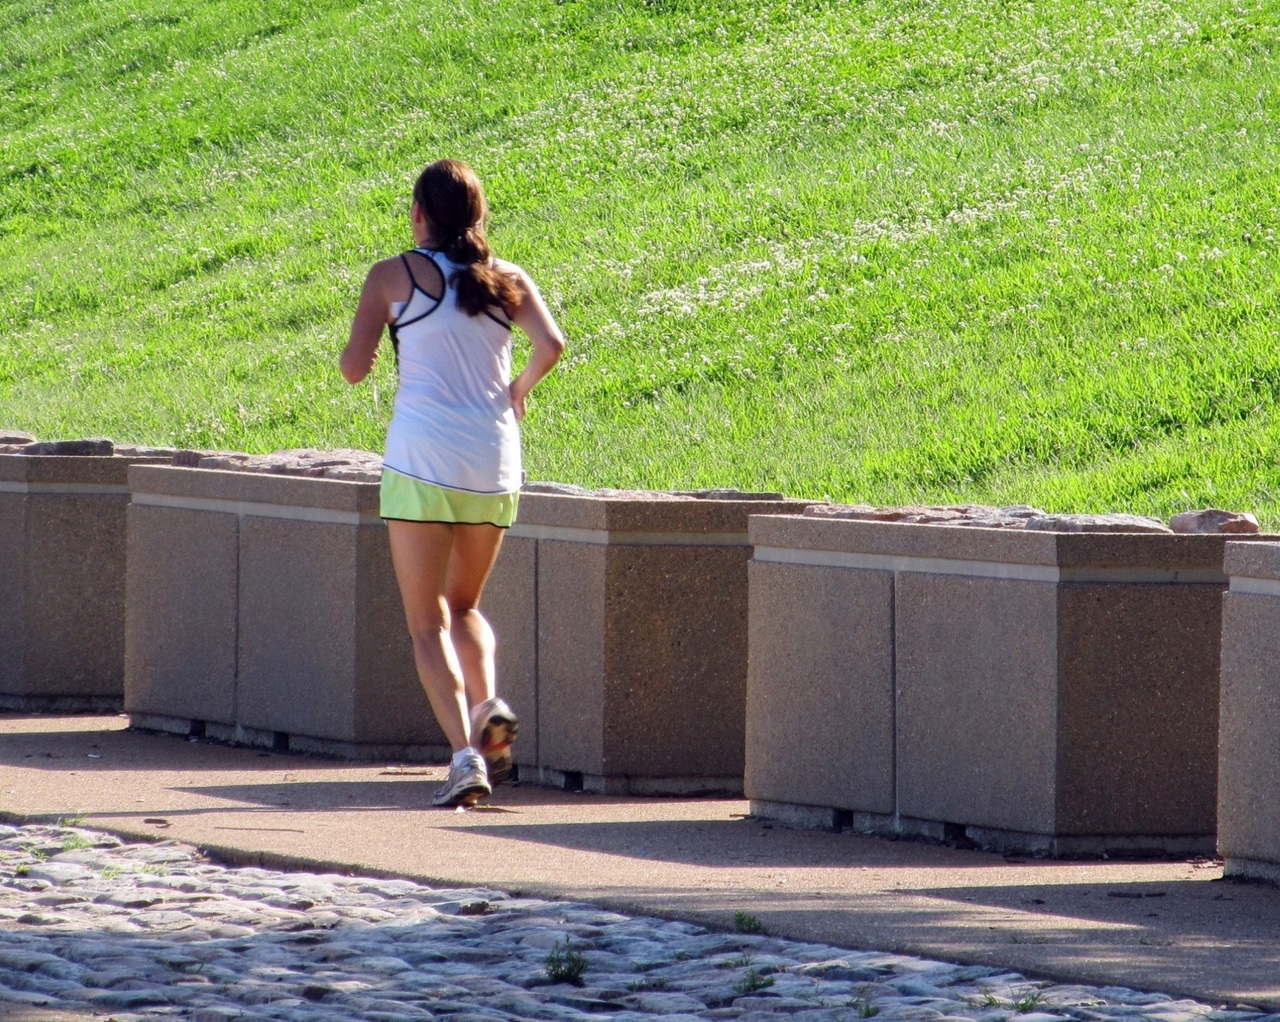 Ejercicio fisico mujer running